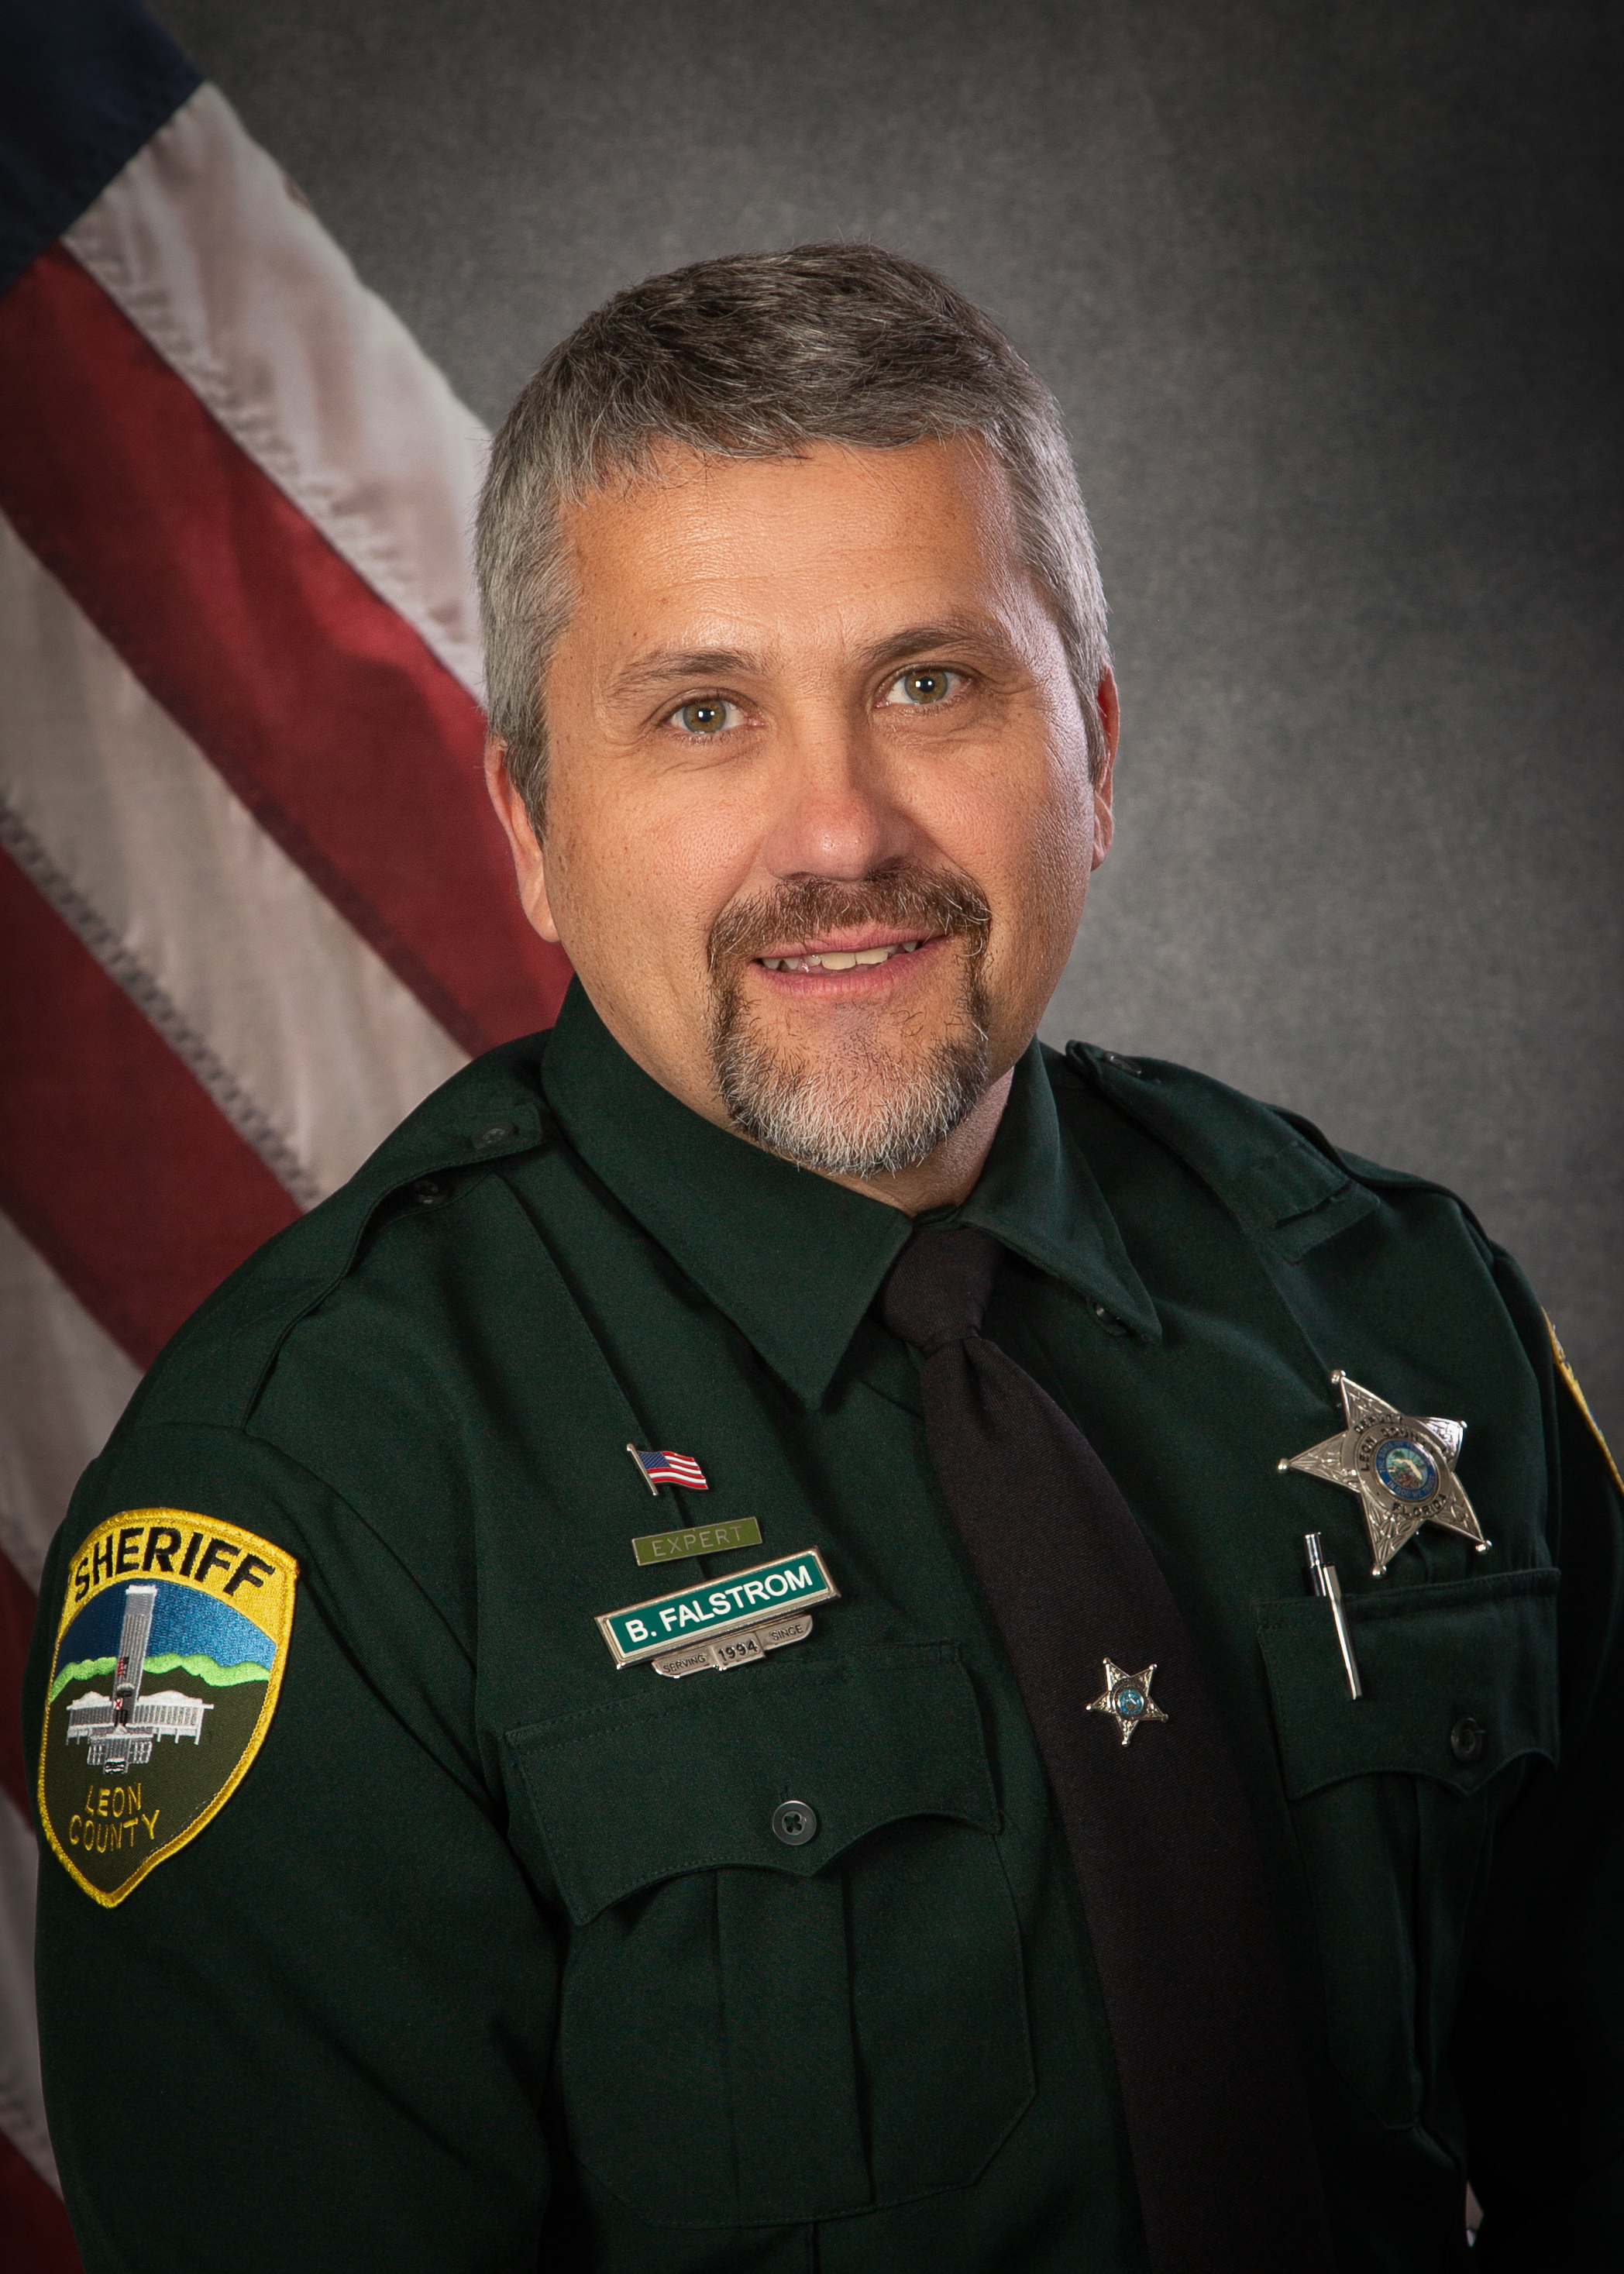 Second Chance – Deputy Brian Falstrom